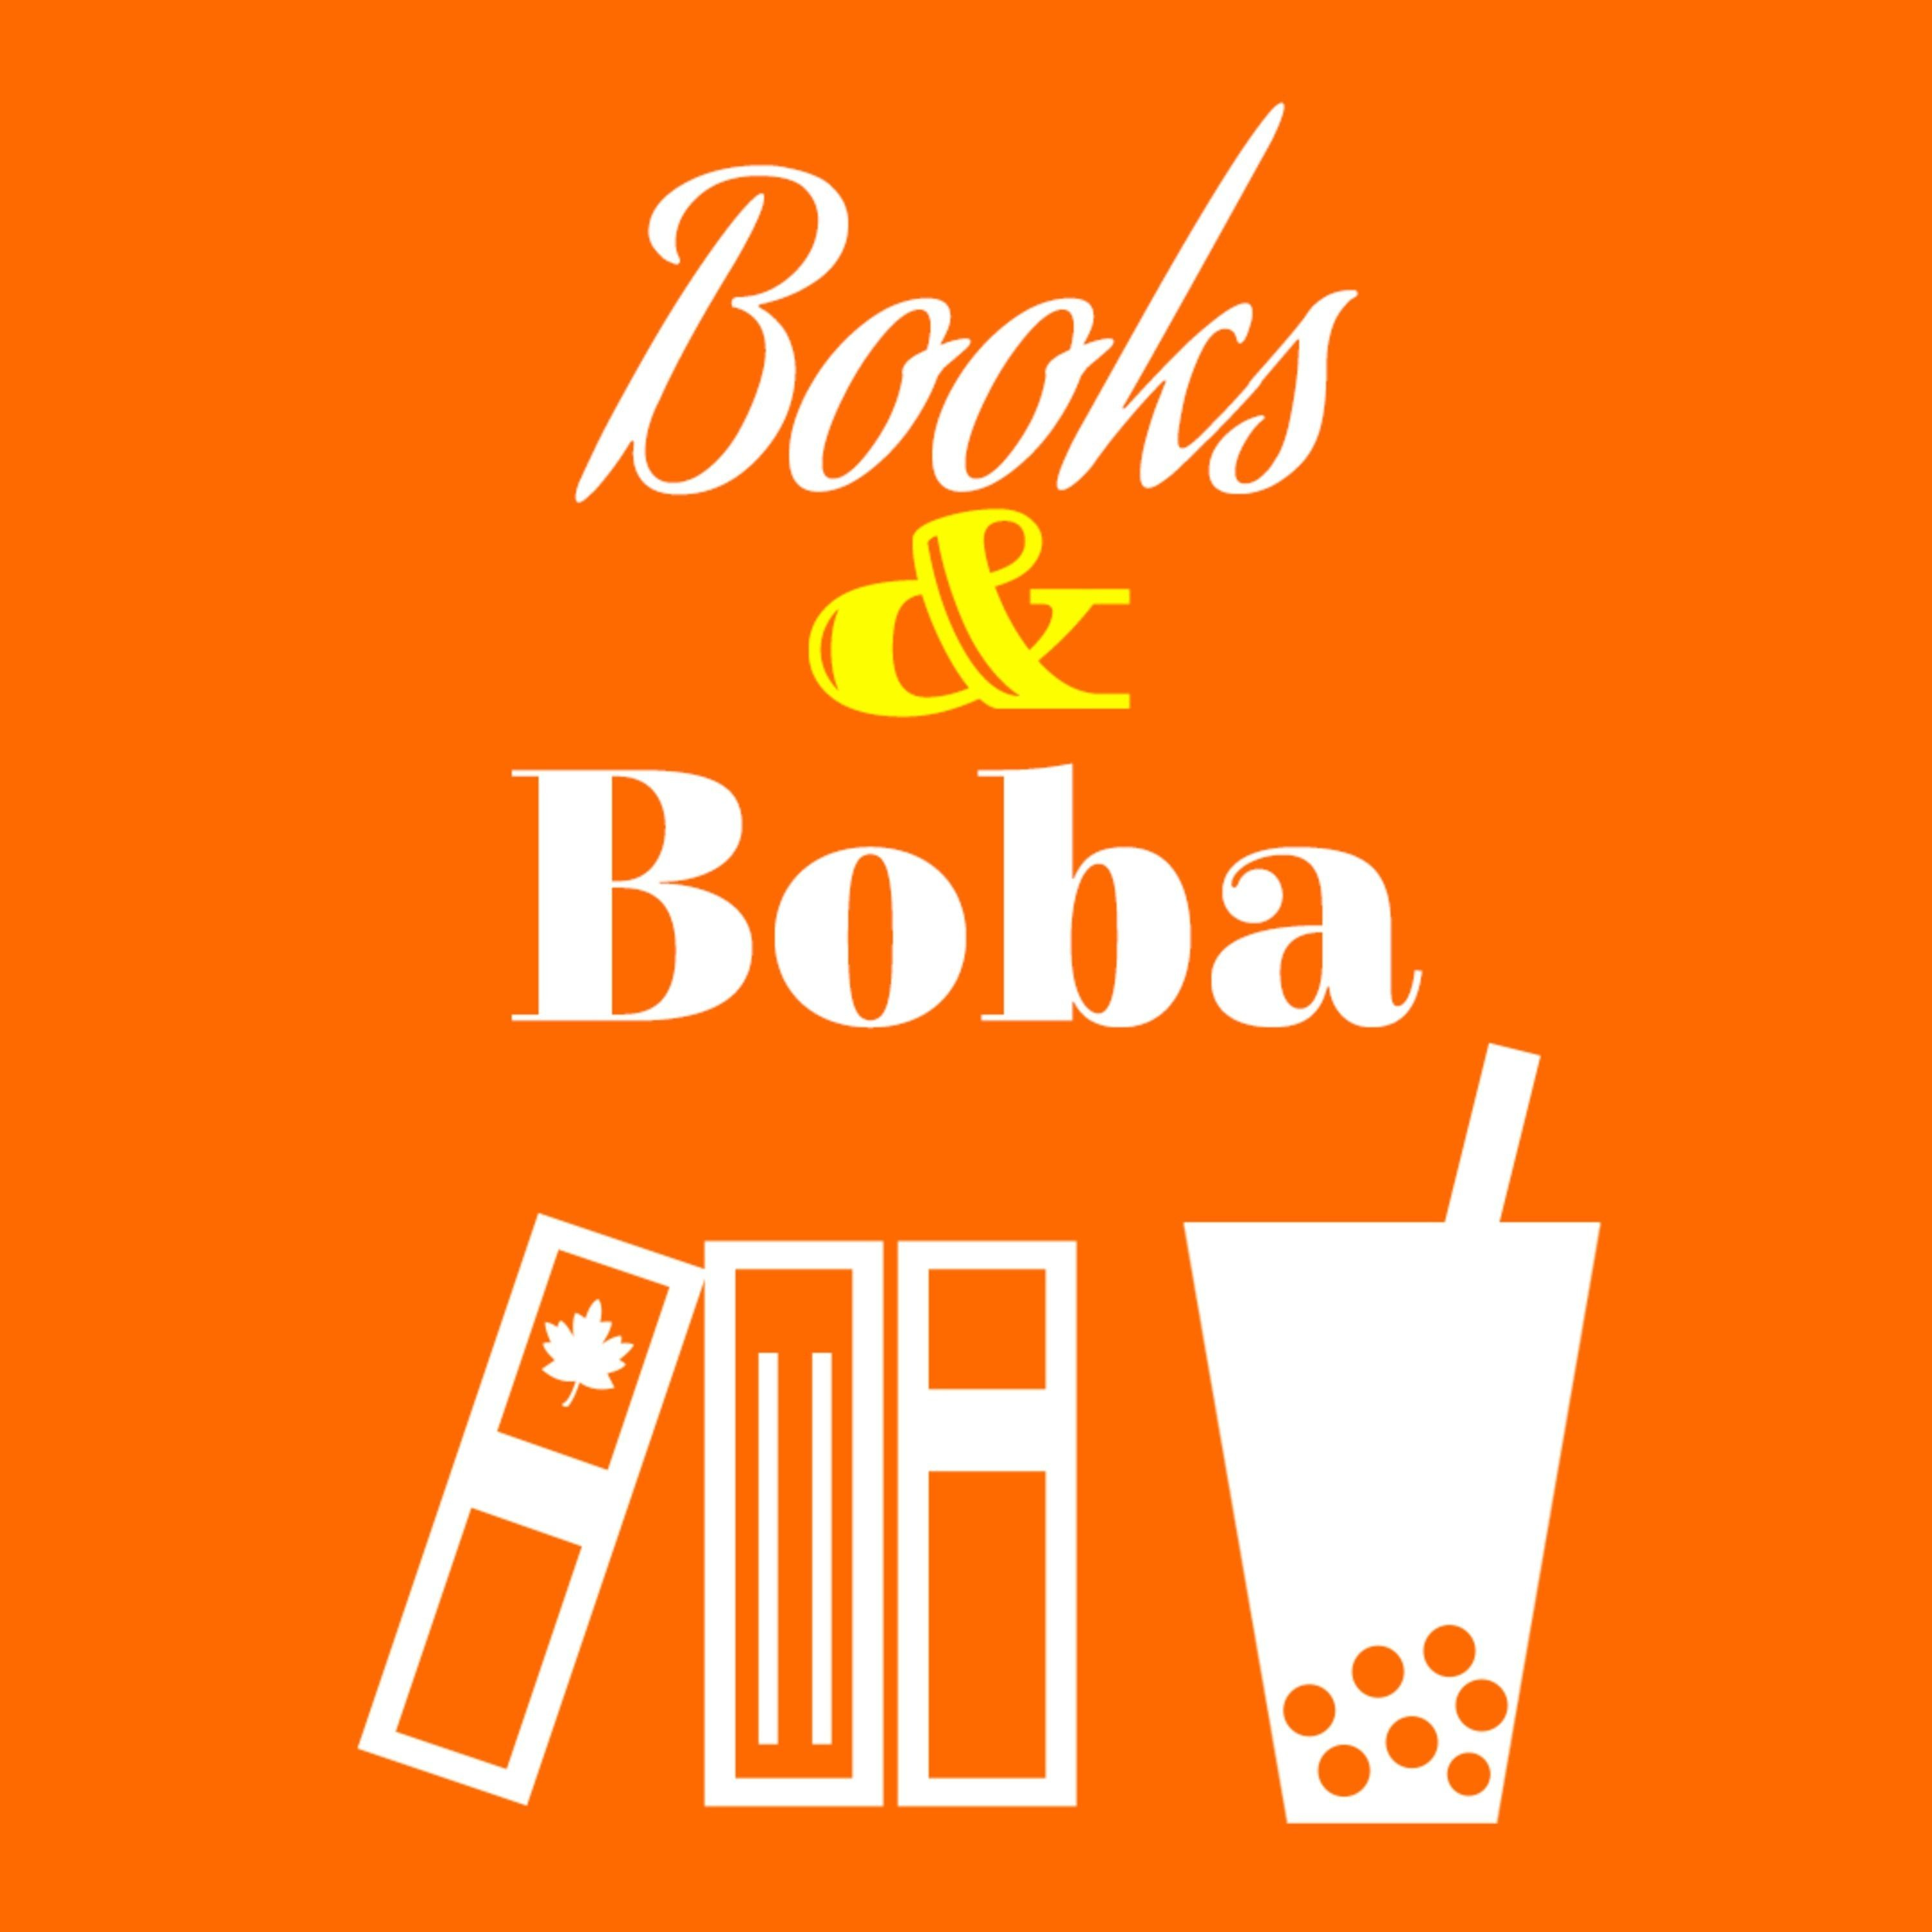 Artwork for Books and Boba